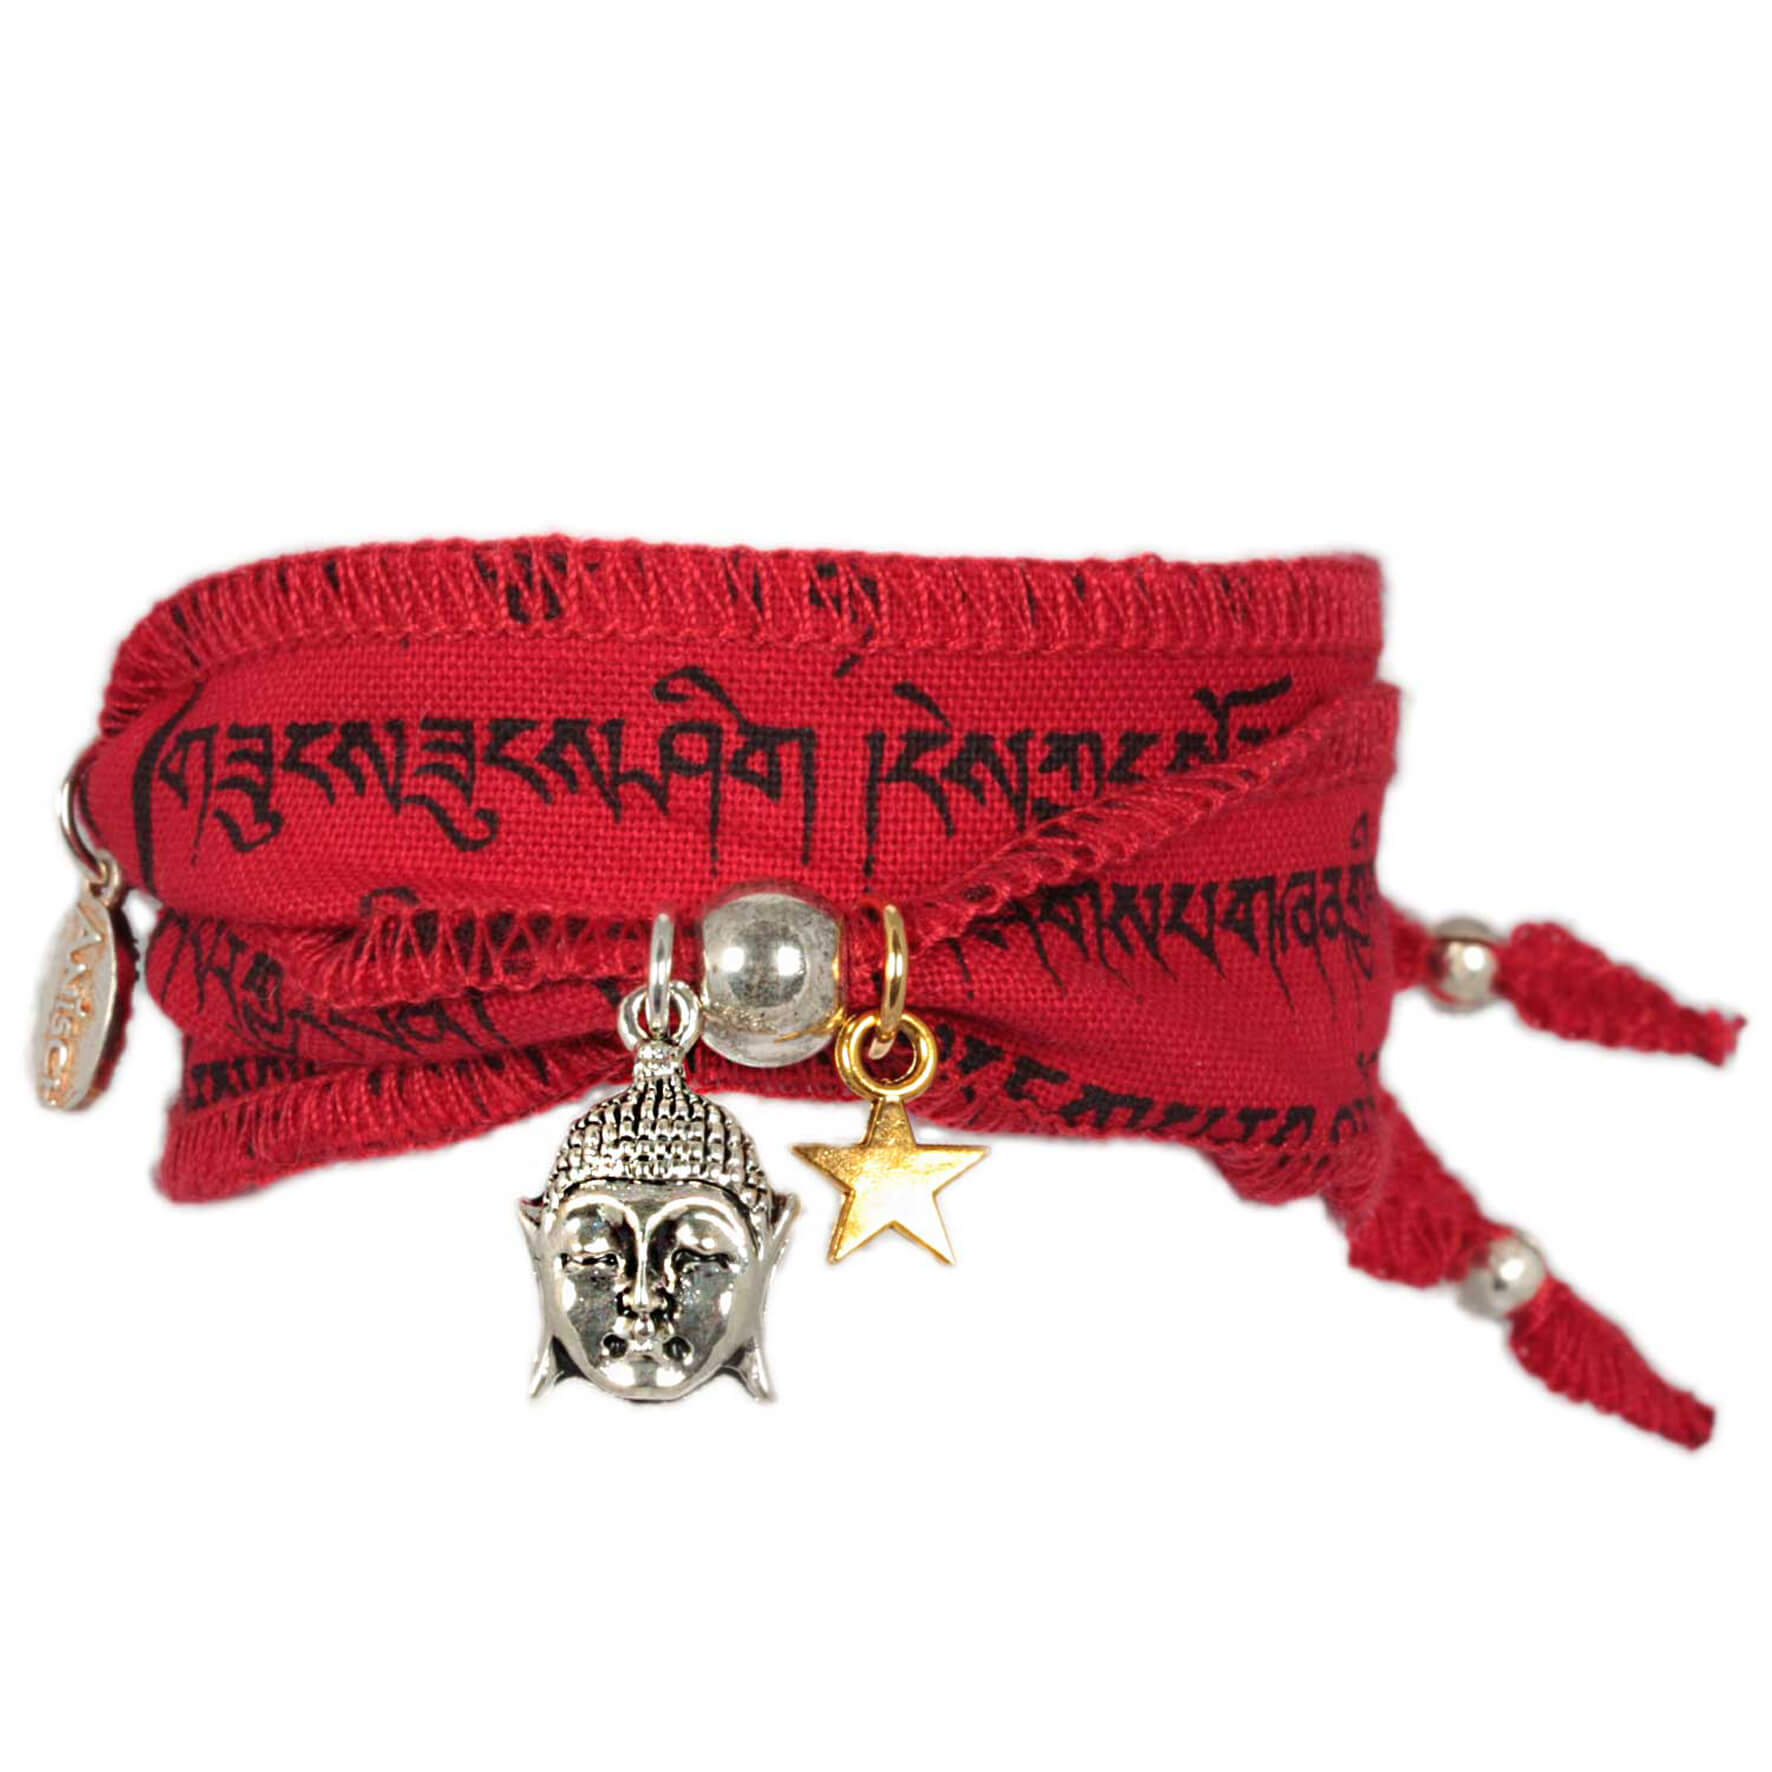 Fire Buddha - Tibetan Wish bracelet made from Tibetan prayer flags